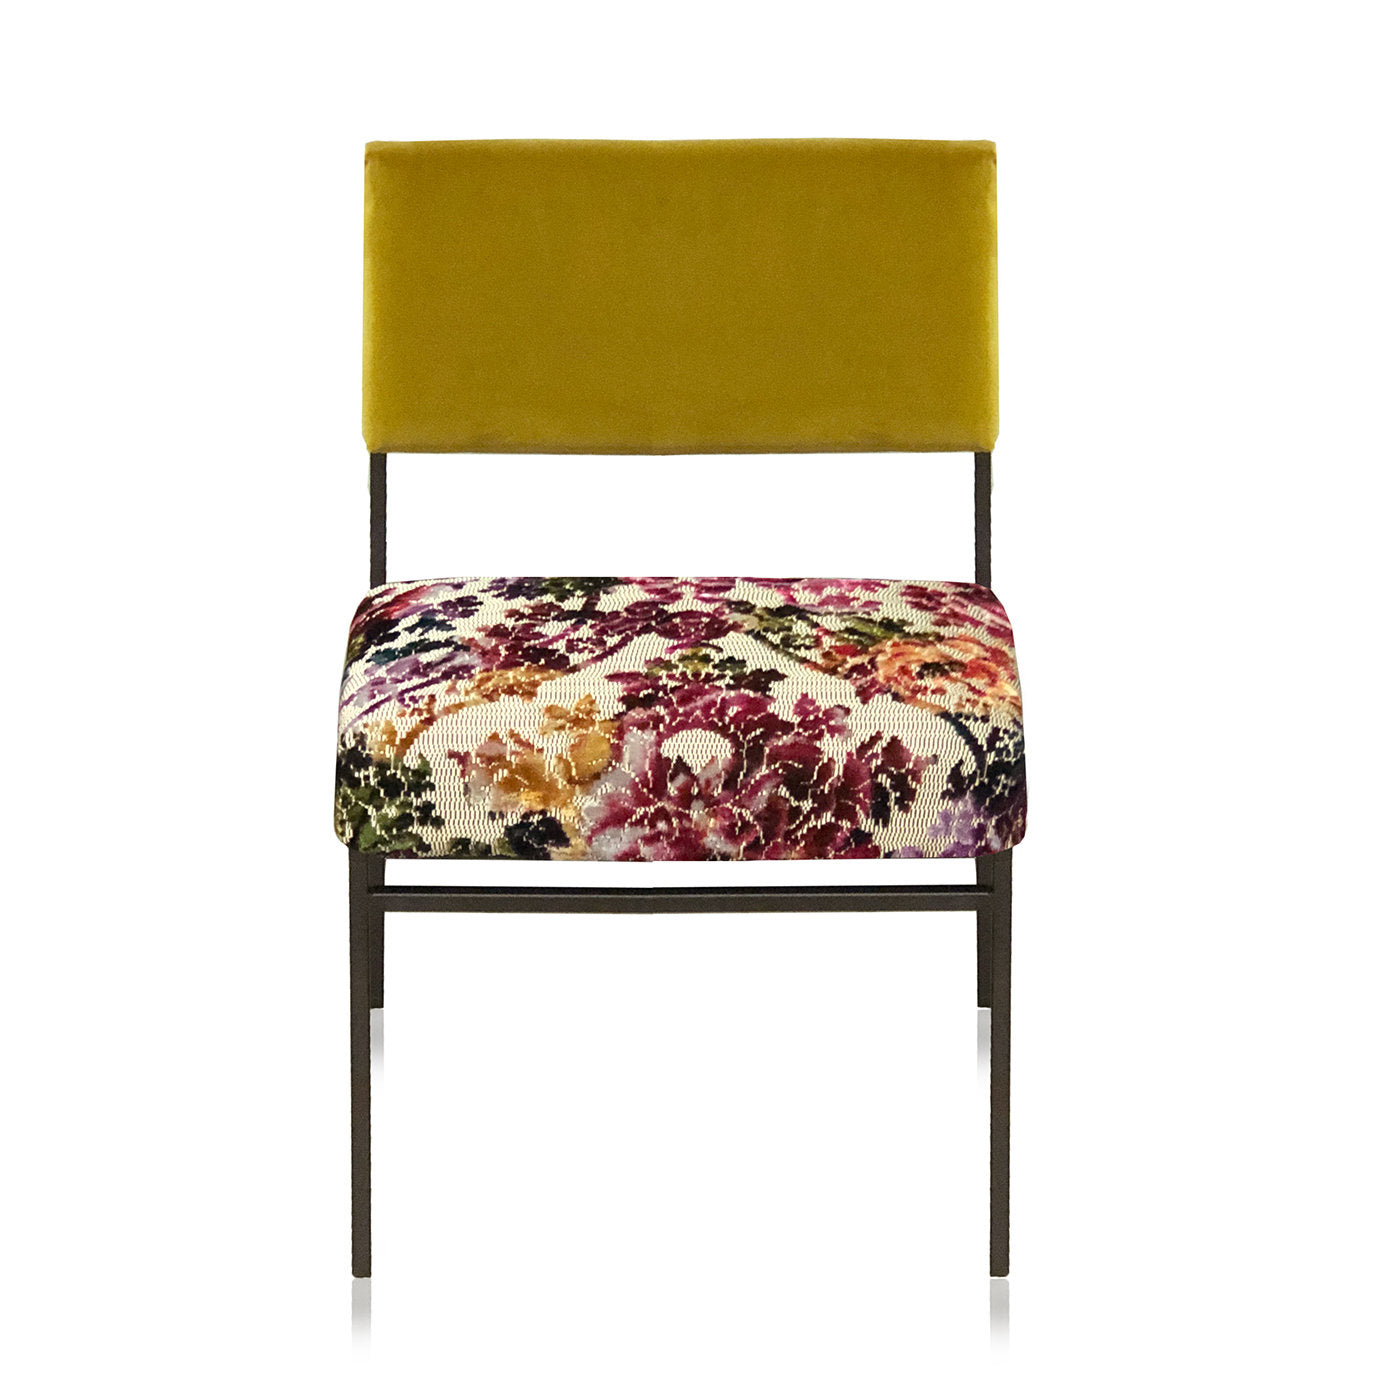 Aurea Bio Yellow Velvet Chair by CtrlZak and Davide Barzaghi  - Alternative view 1